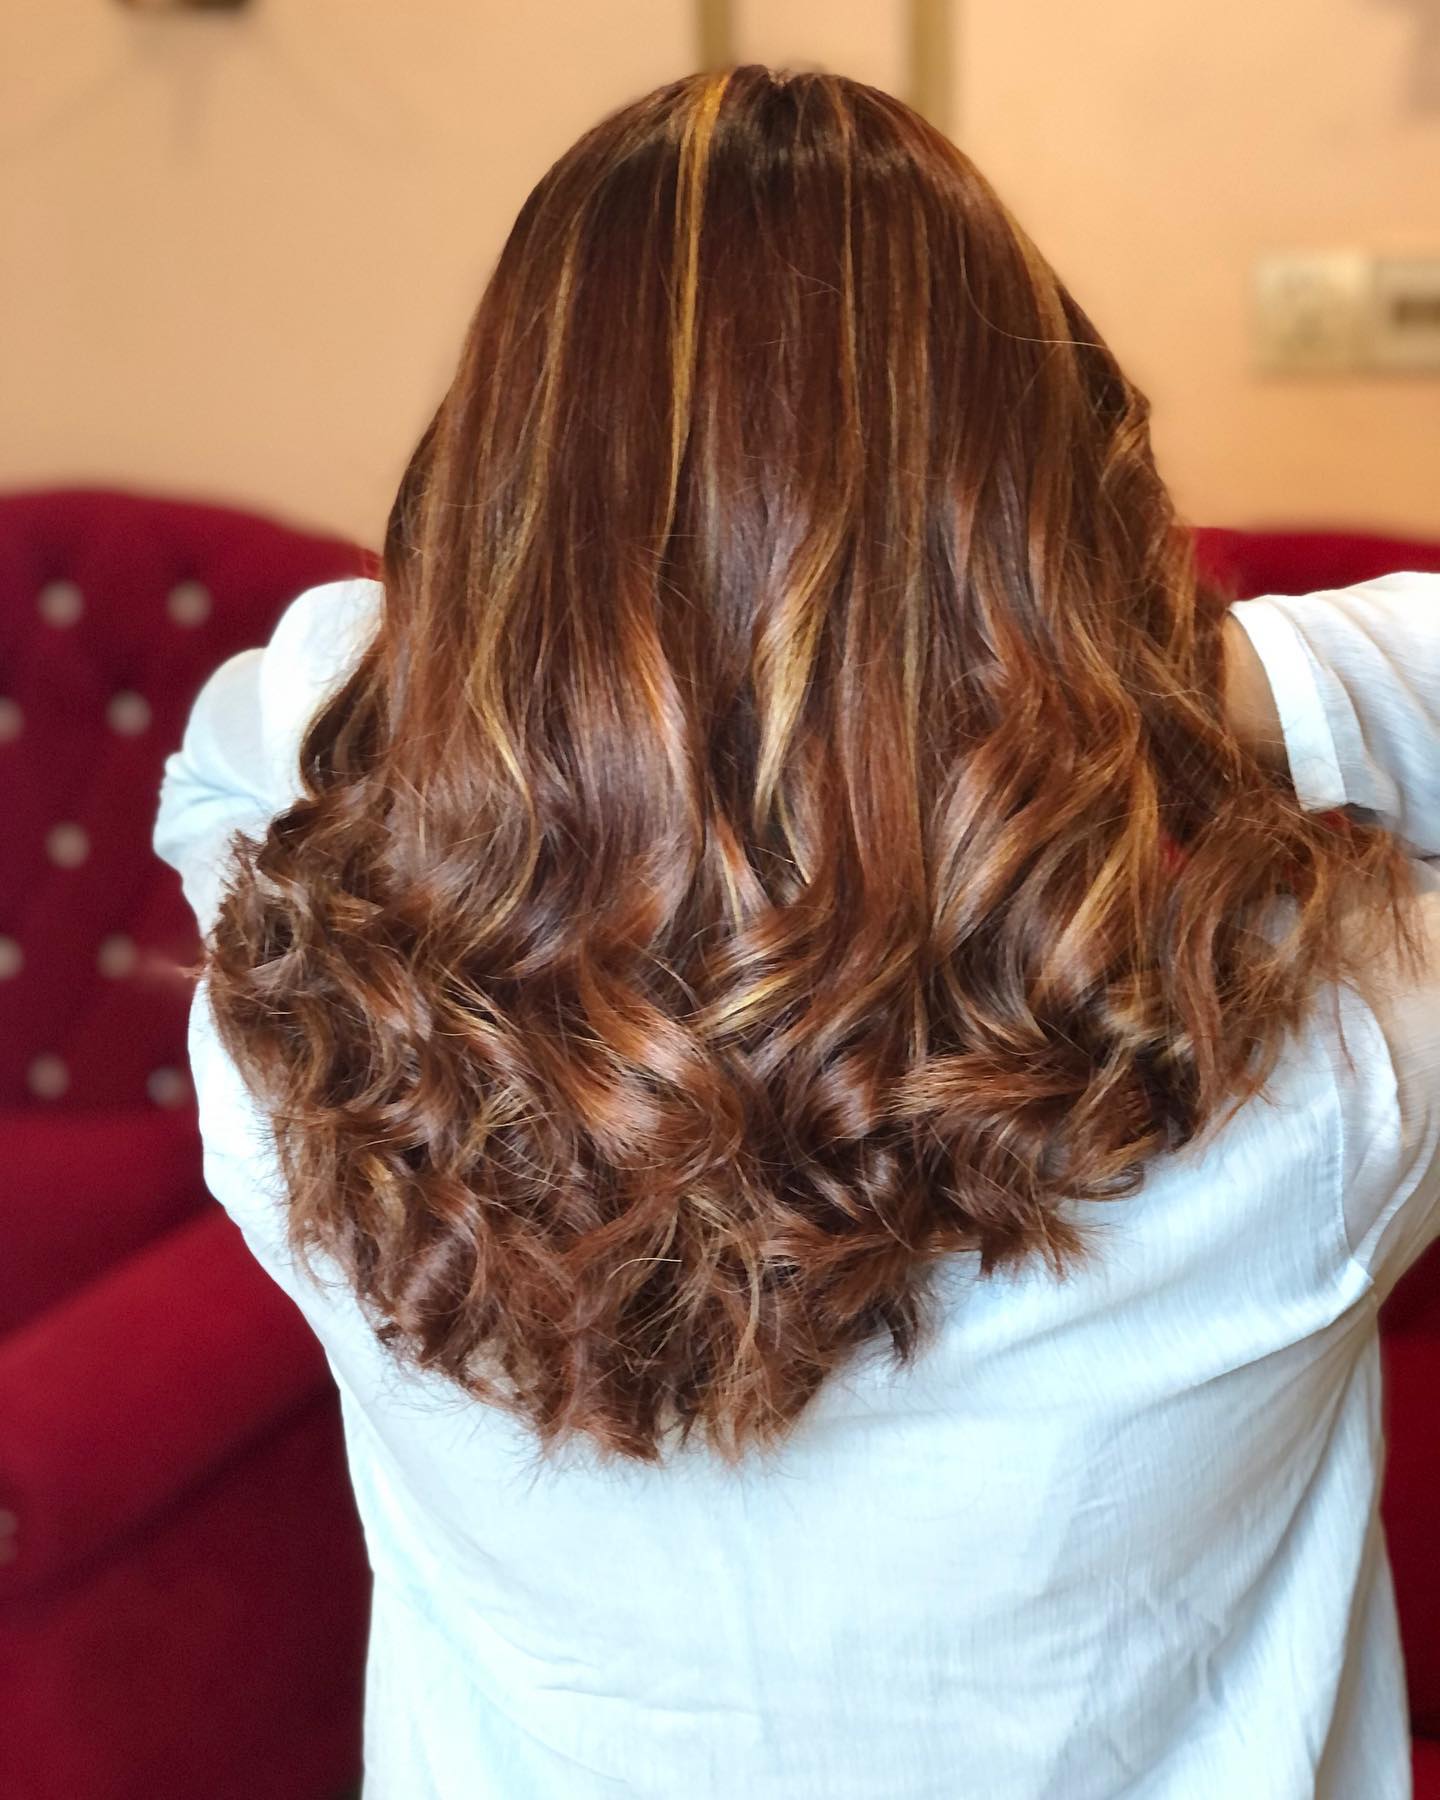 Mahogany Hair Color With Highlights